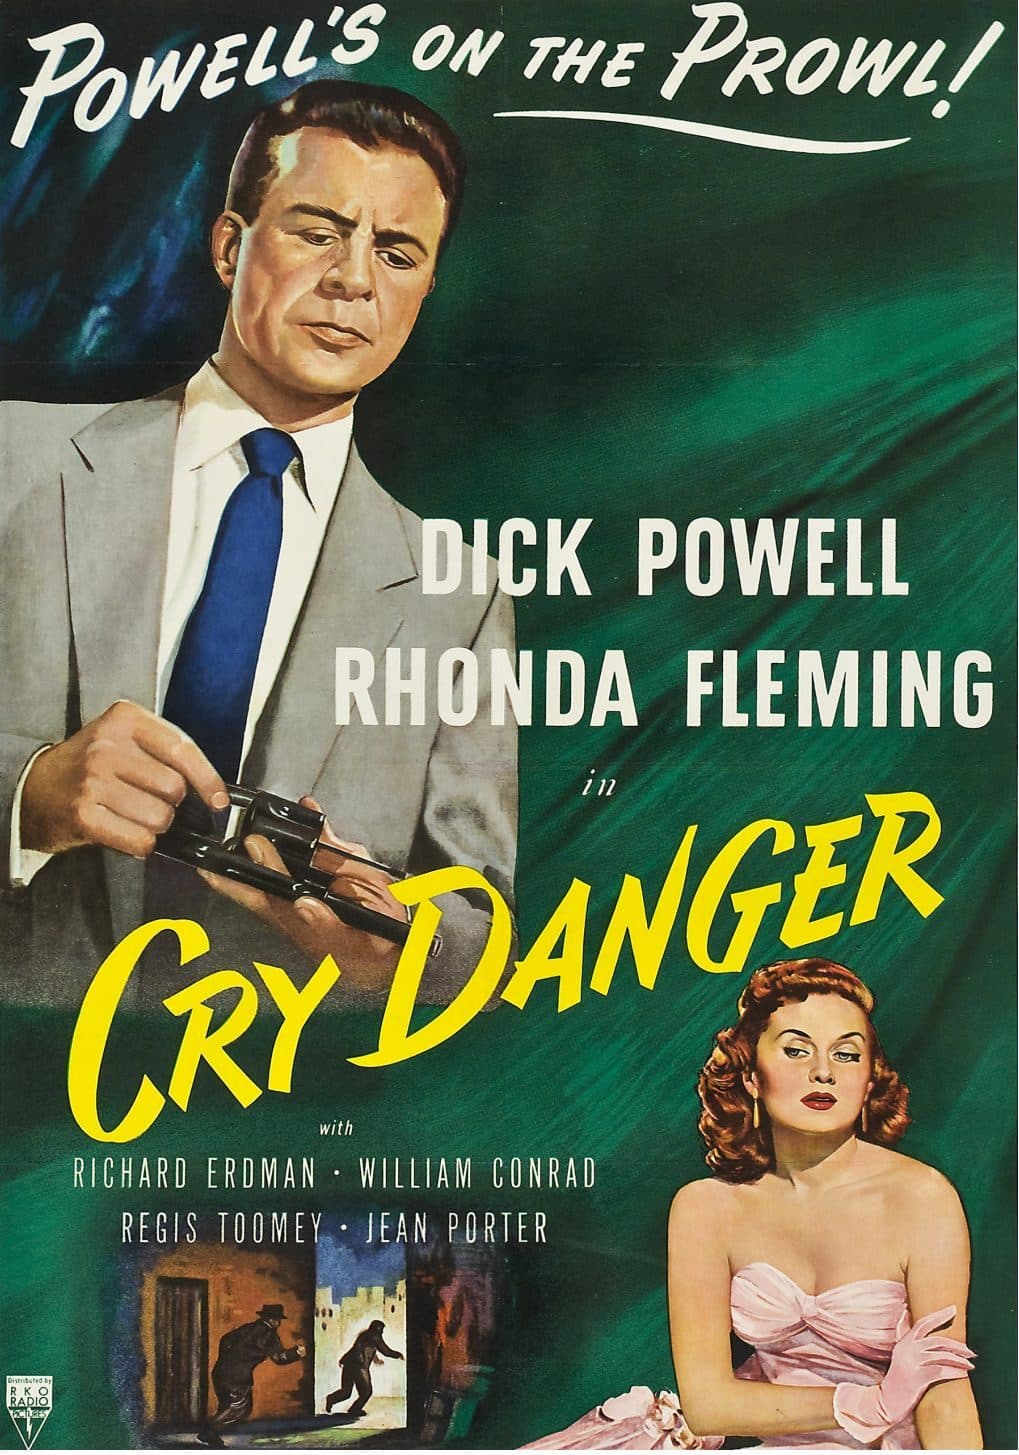 Cry Danger - Dick Powell DVD - Film Classics